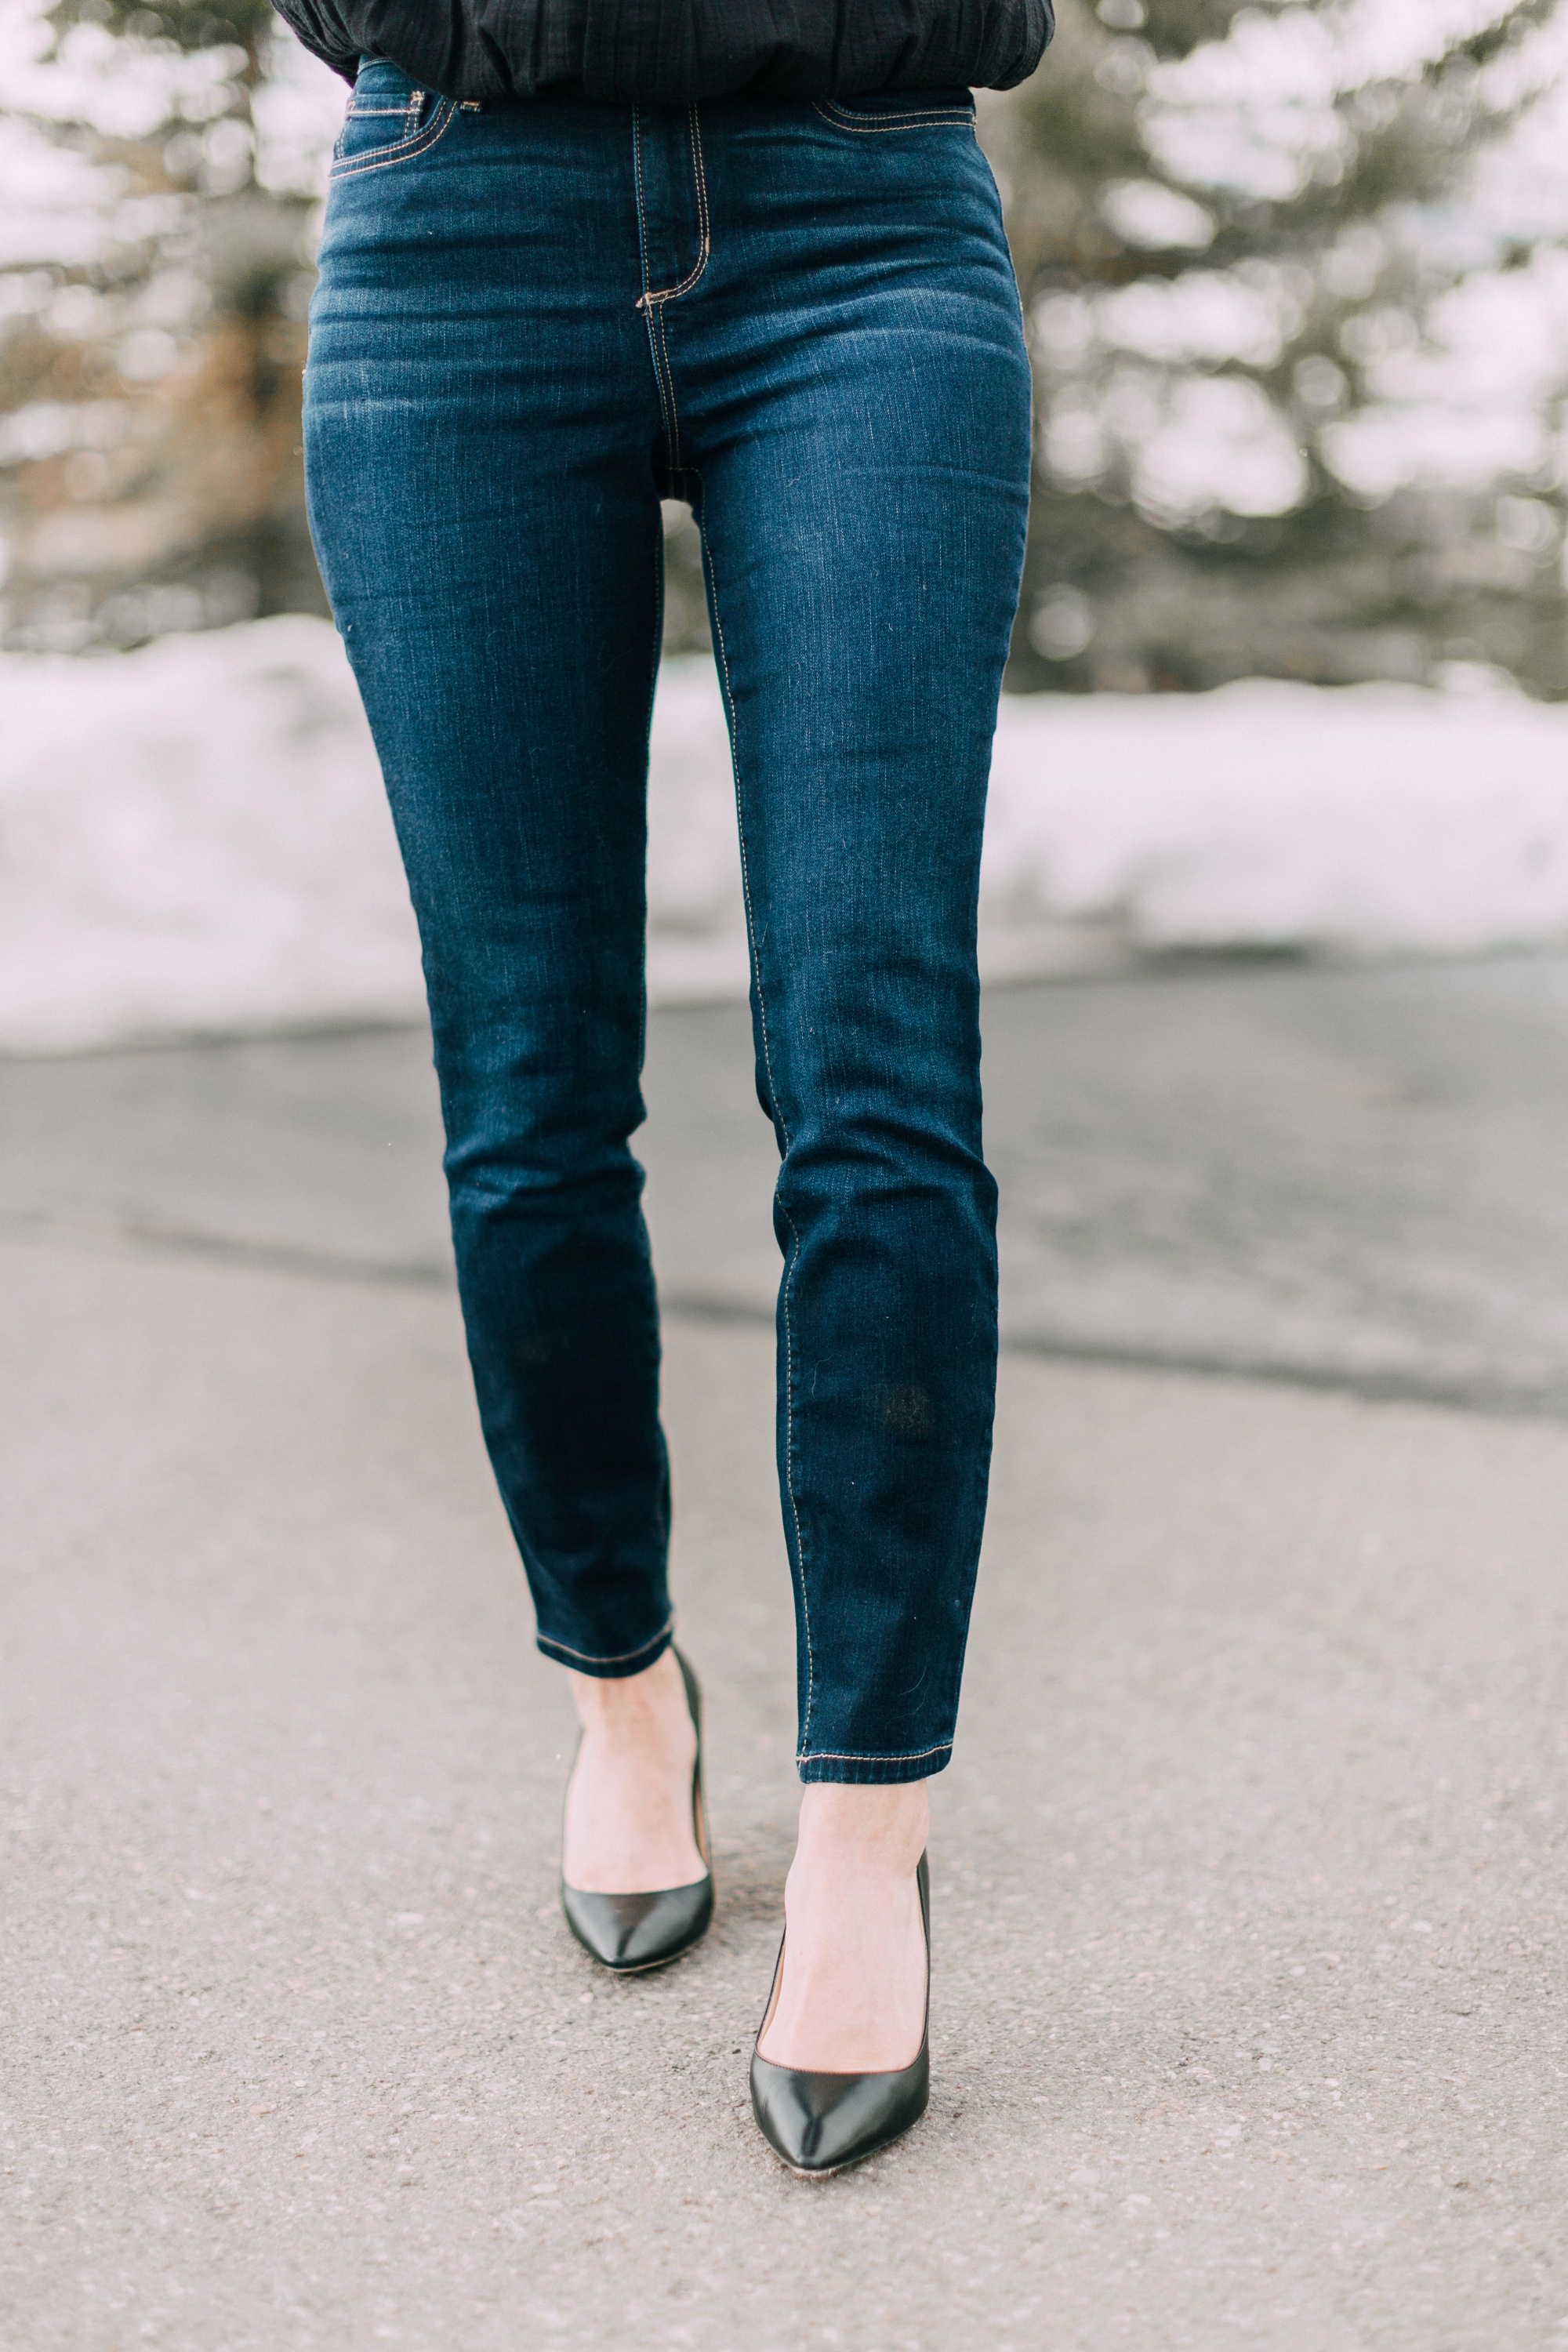 sophia jeans at walmart